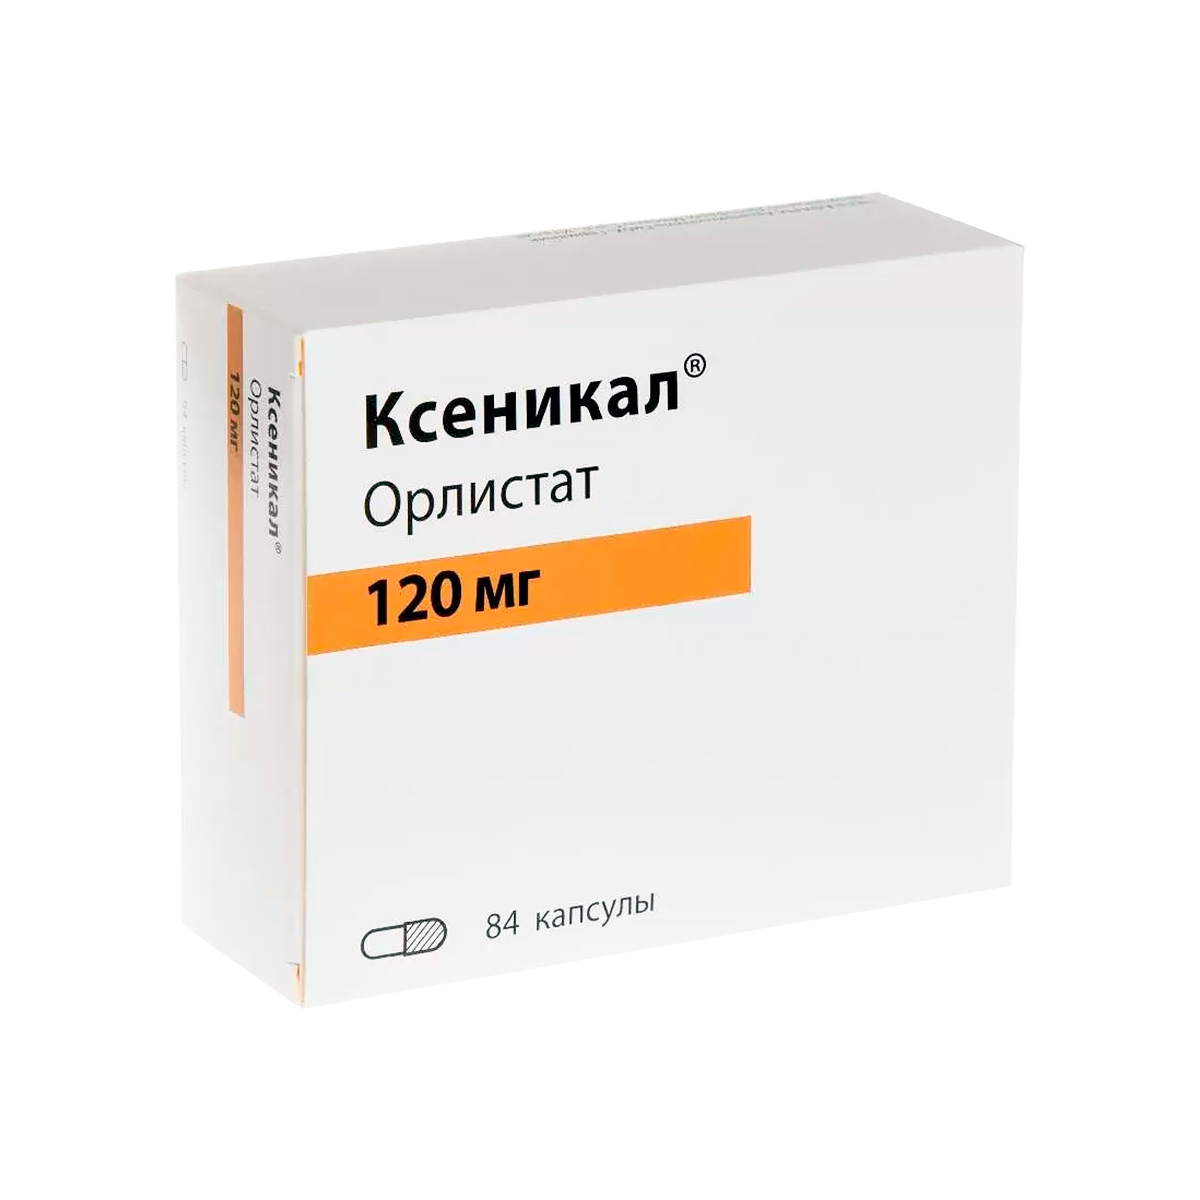 Ксеникал 120 мг капсулы 84 шт